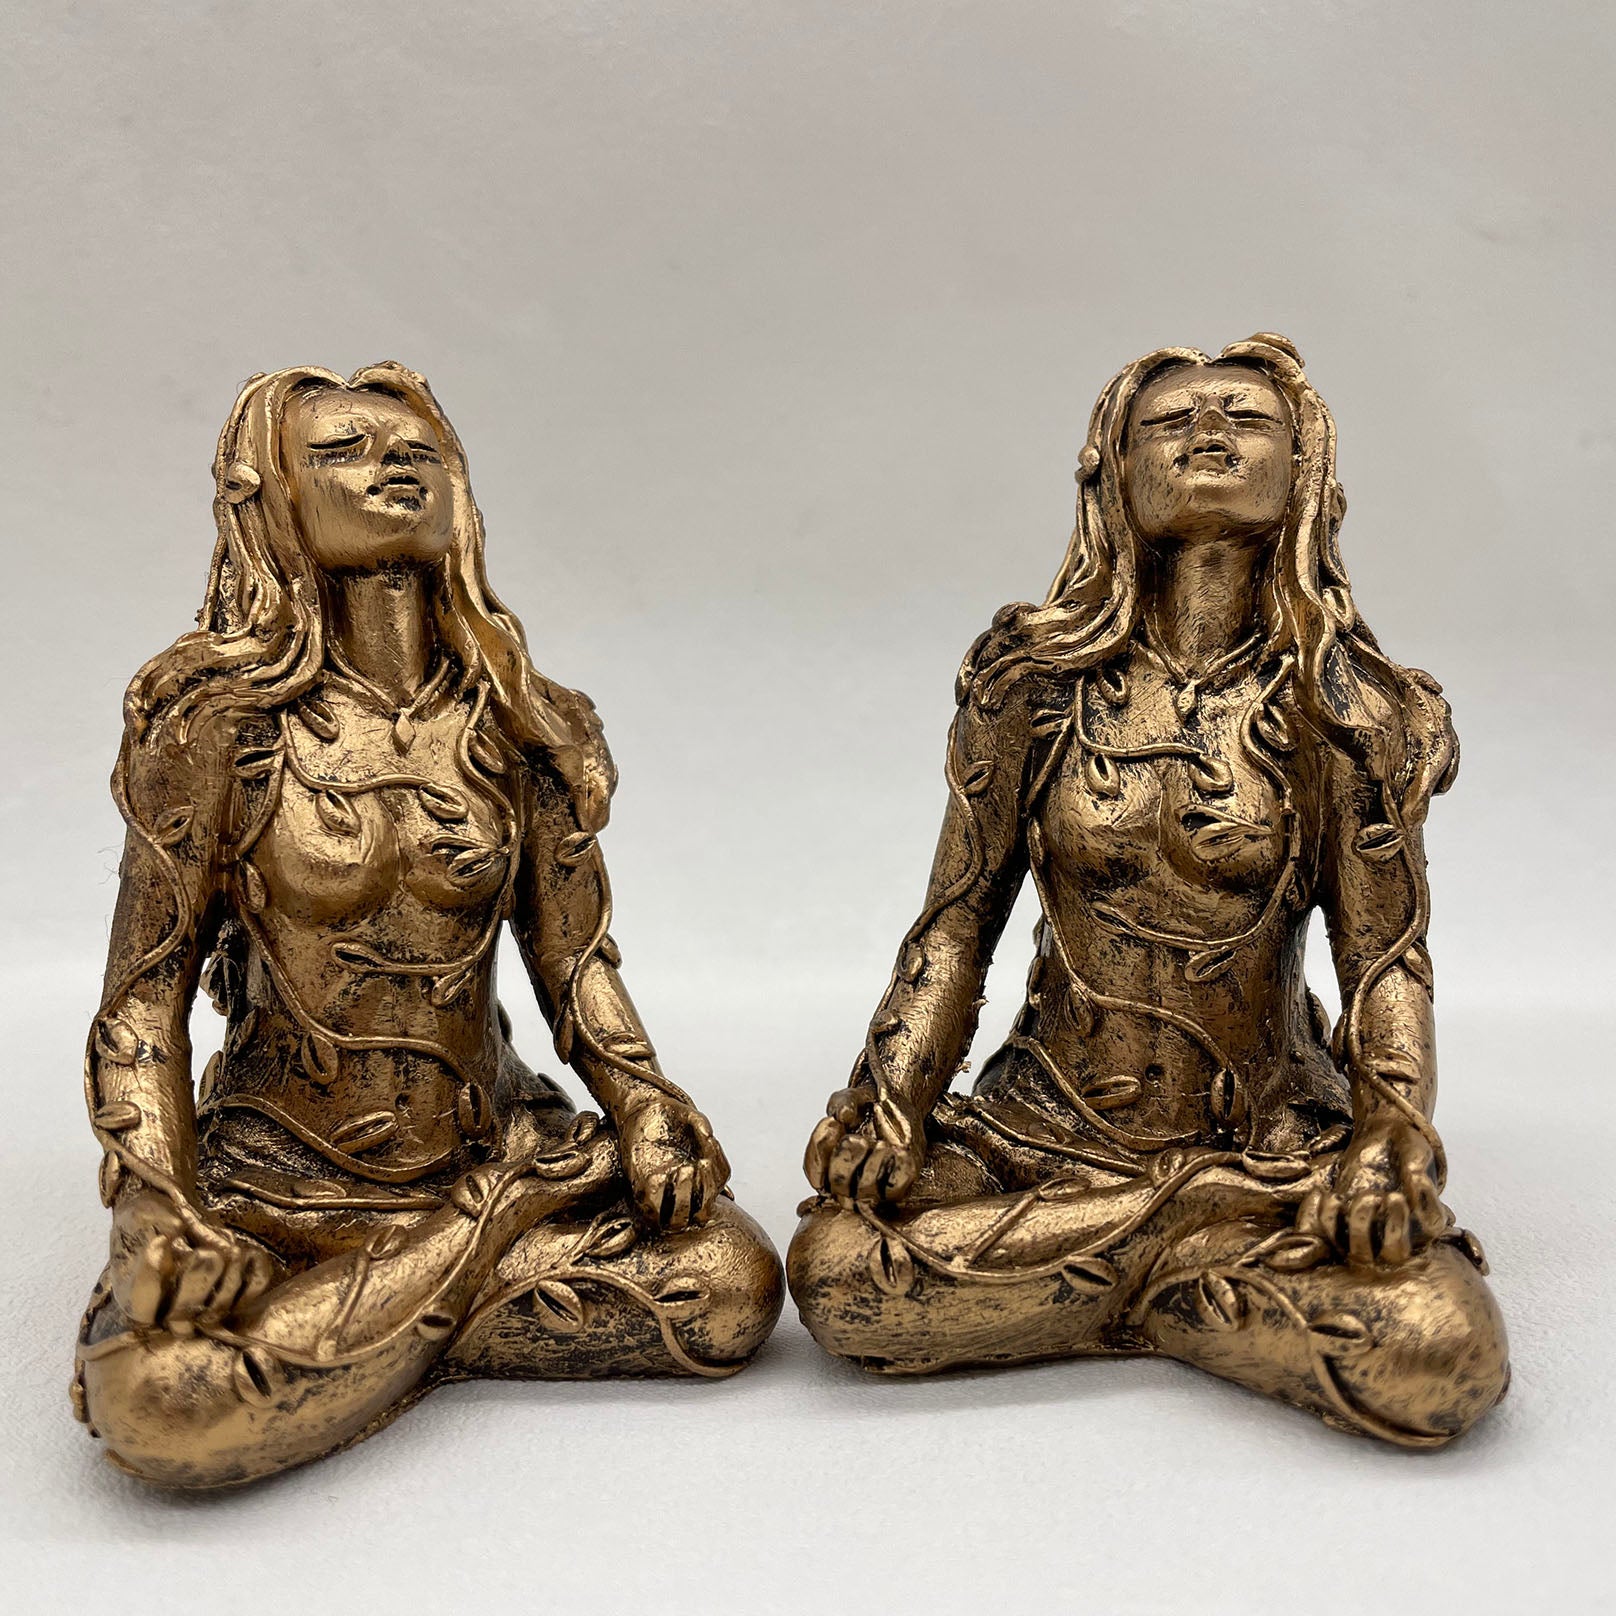 Zen Decor Ideas - Mother Earth Statue Mini Gaia Fairy Decorative Buddha Statue Decorative Figurines Goddess - Healing Chakra Meditation Home Decor - Personal Hour for Yoga and Meditations 